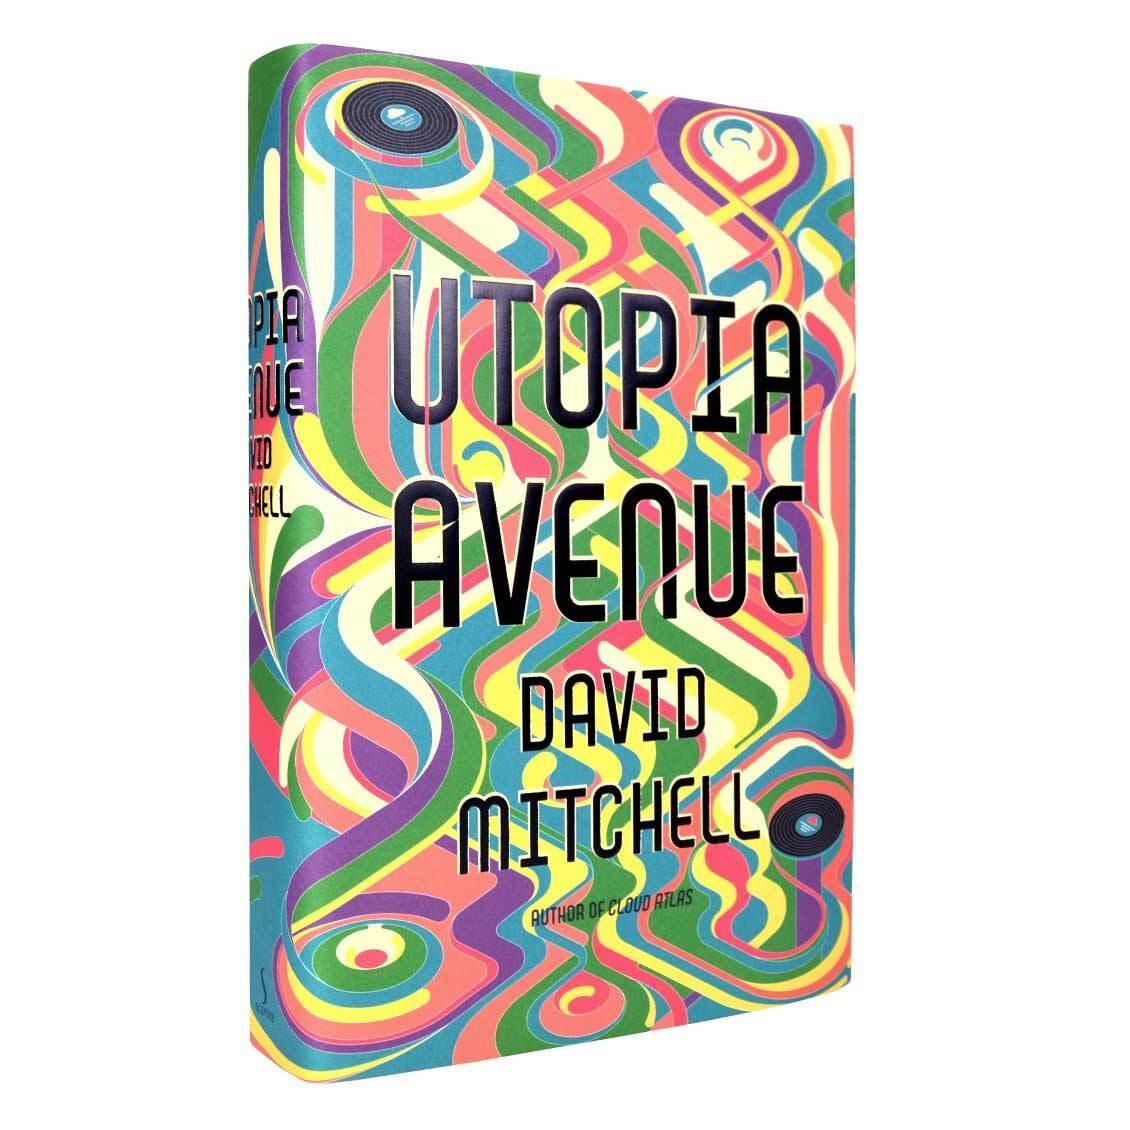 utopia avenue david mitchell